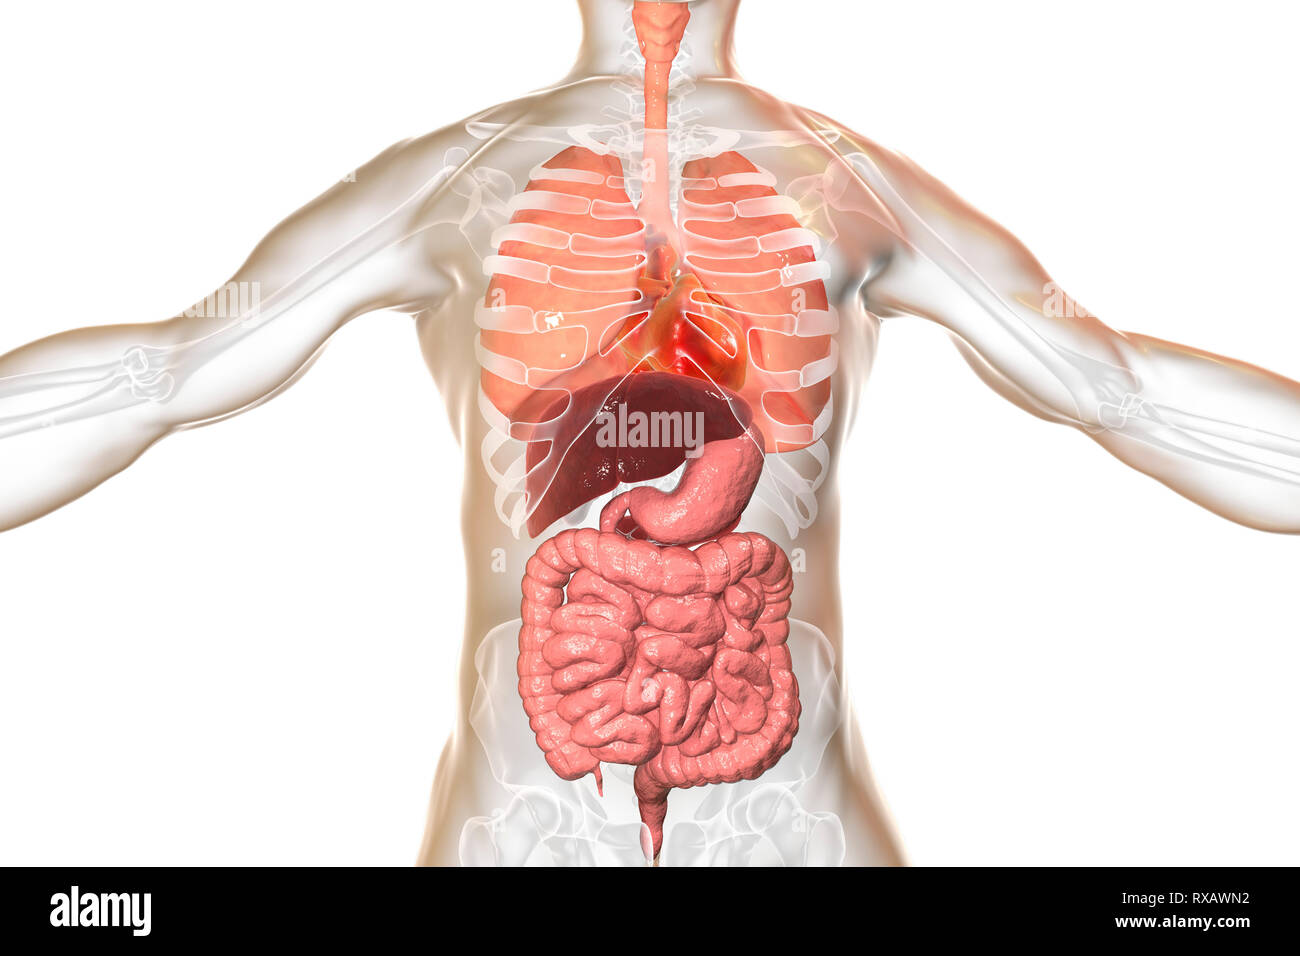 Illustration of a man's internal organs Stock Photo